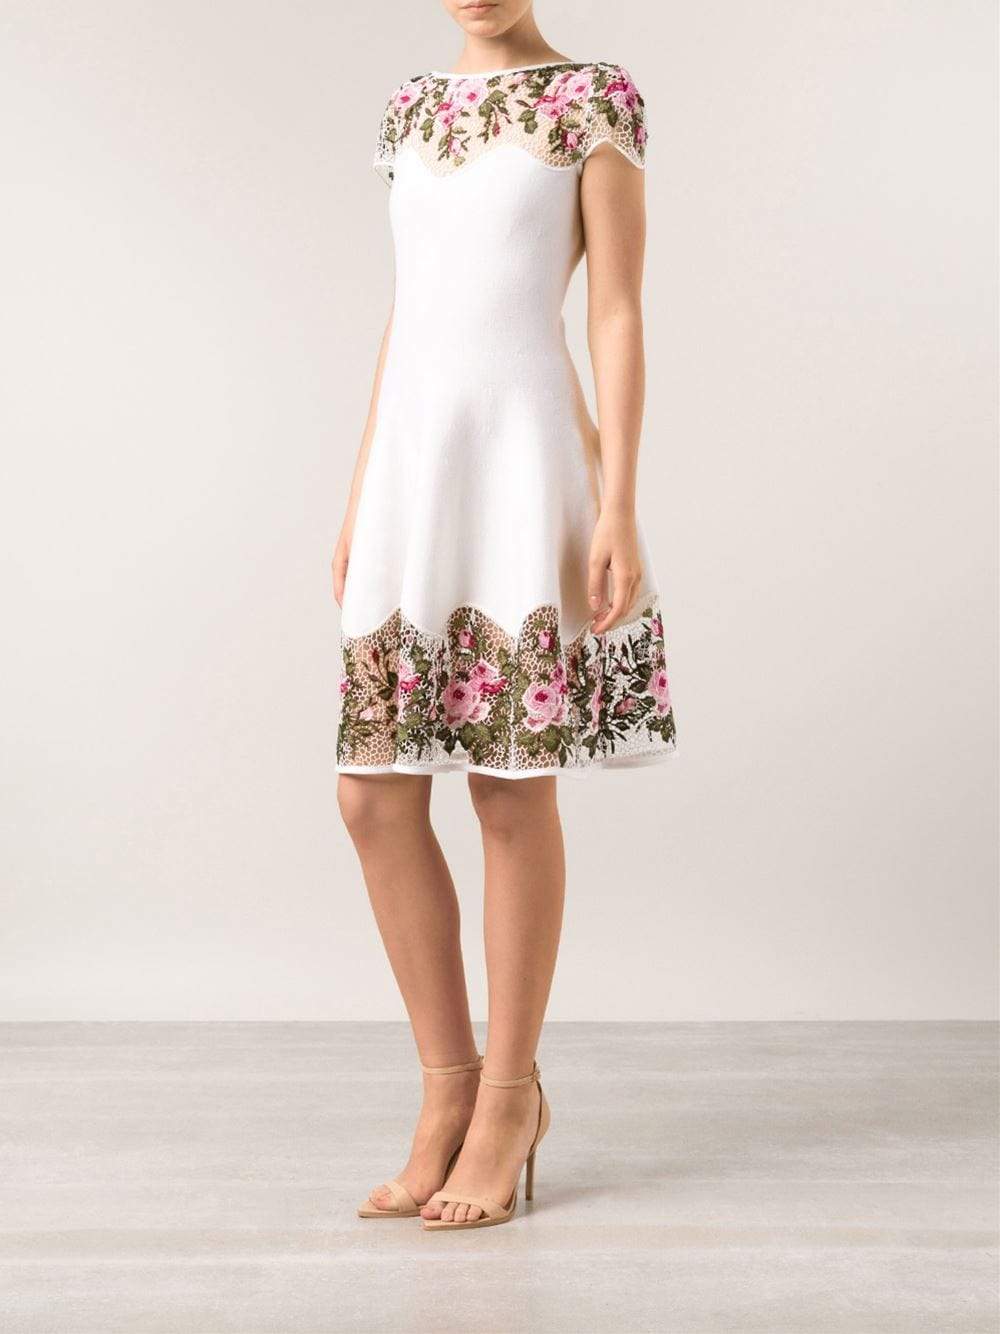 BLUMARINE CLOTHINGDRESSCOCKTAIL Floral Dress With Macrame Detail